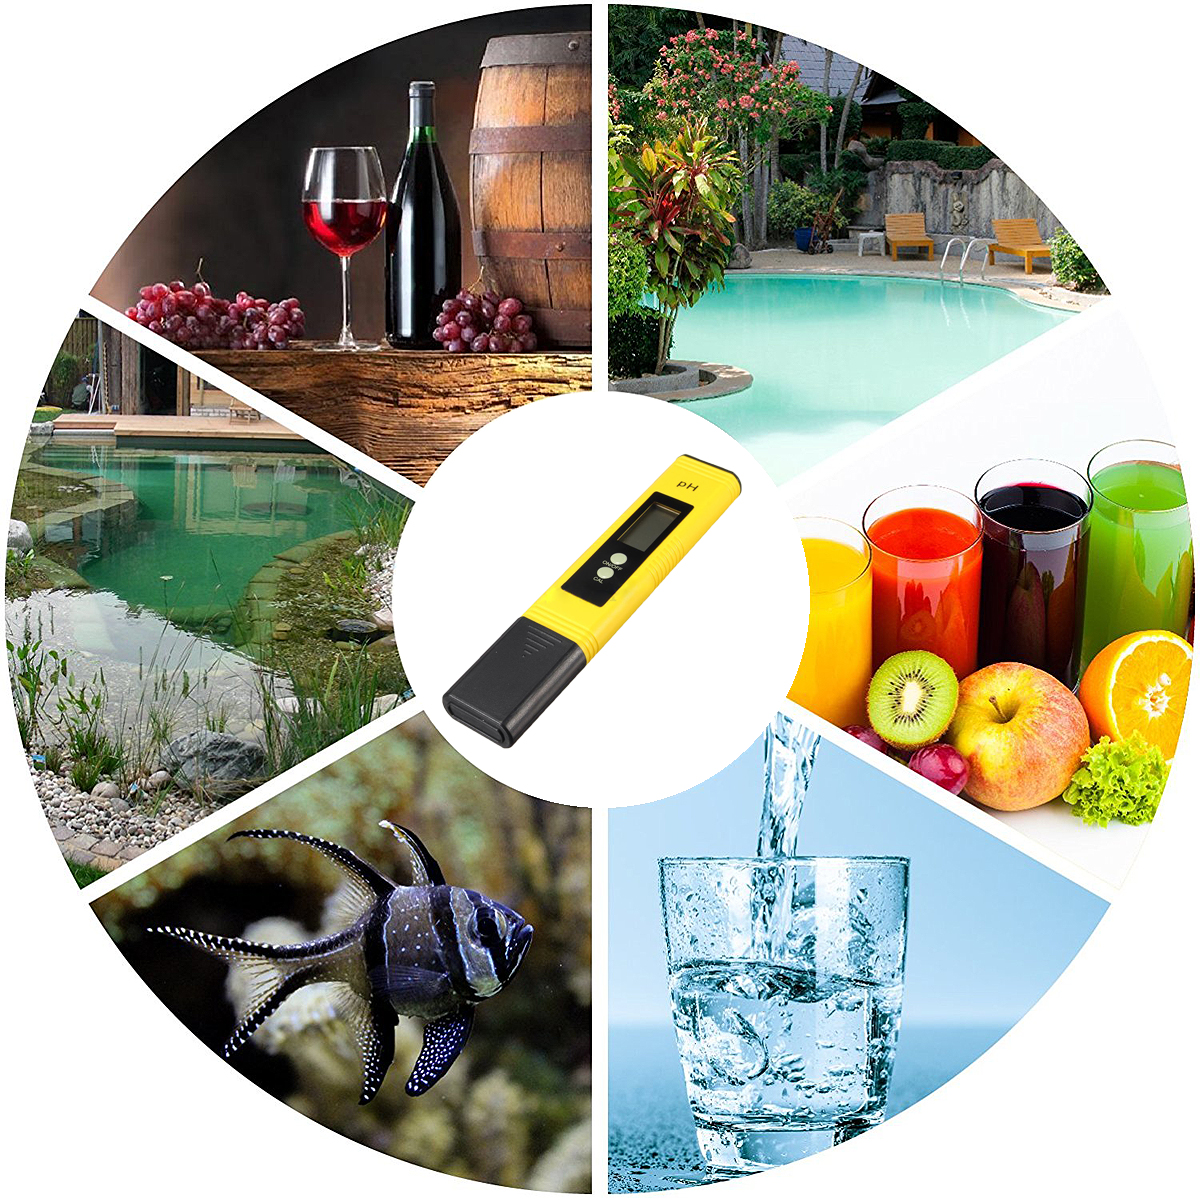 Portable-Digital-Electric-PH-Meter-LCD-Water-Hydroponics-Aquarium-Pool-Quality-Tester-1223721-4